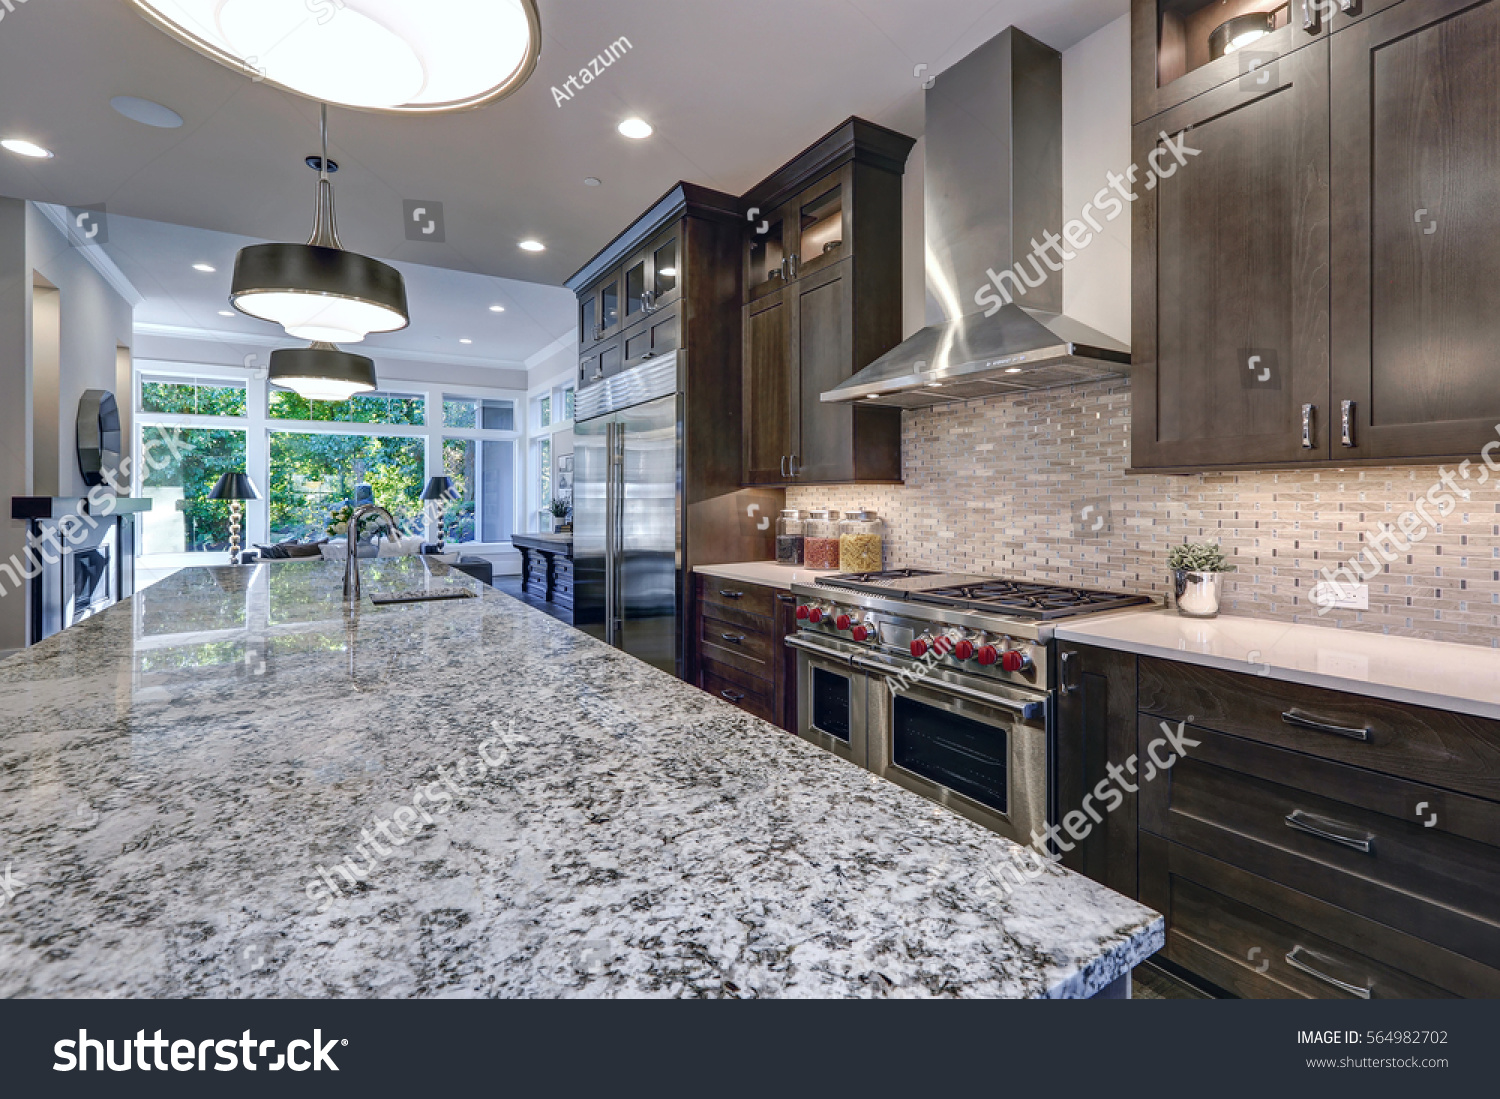 Modern kitchen with brown kitchen cabinets, oversized kitchen island, granite countertops, stainless steel hood over six burner Range and beige backsplash. Northwest, USA
 #564982702